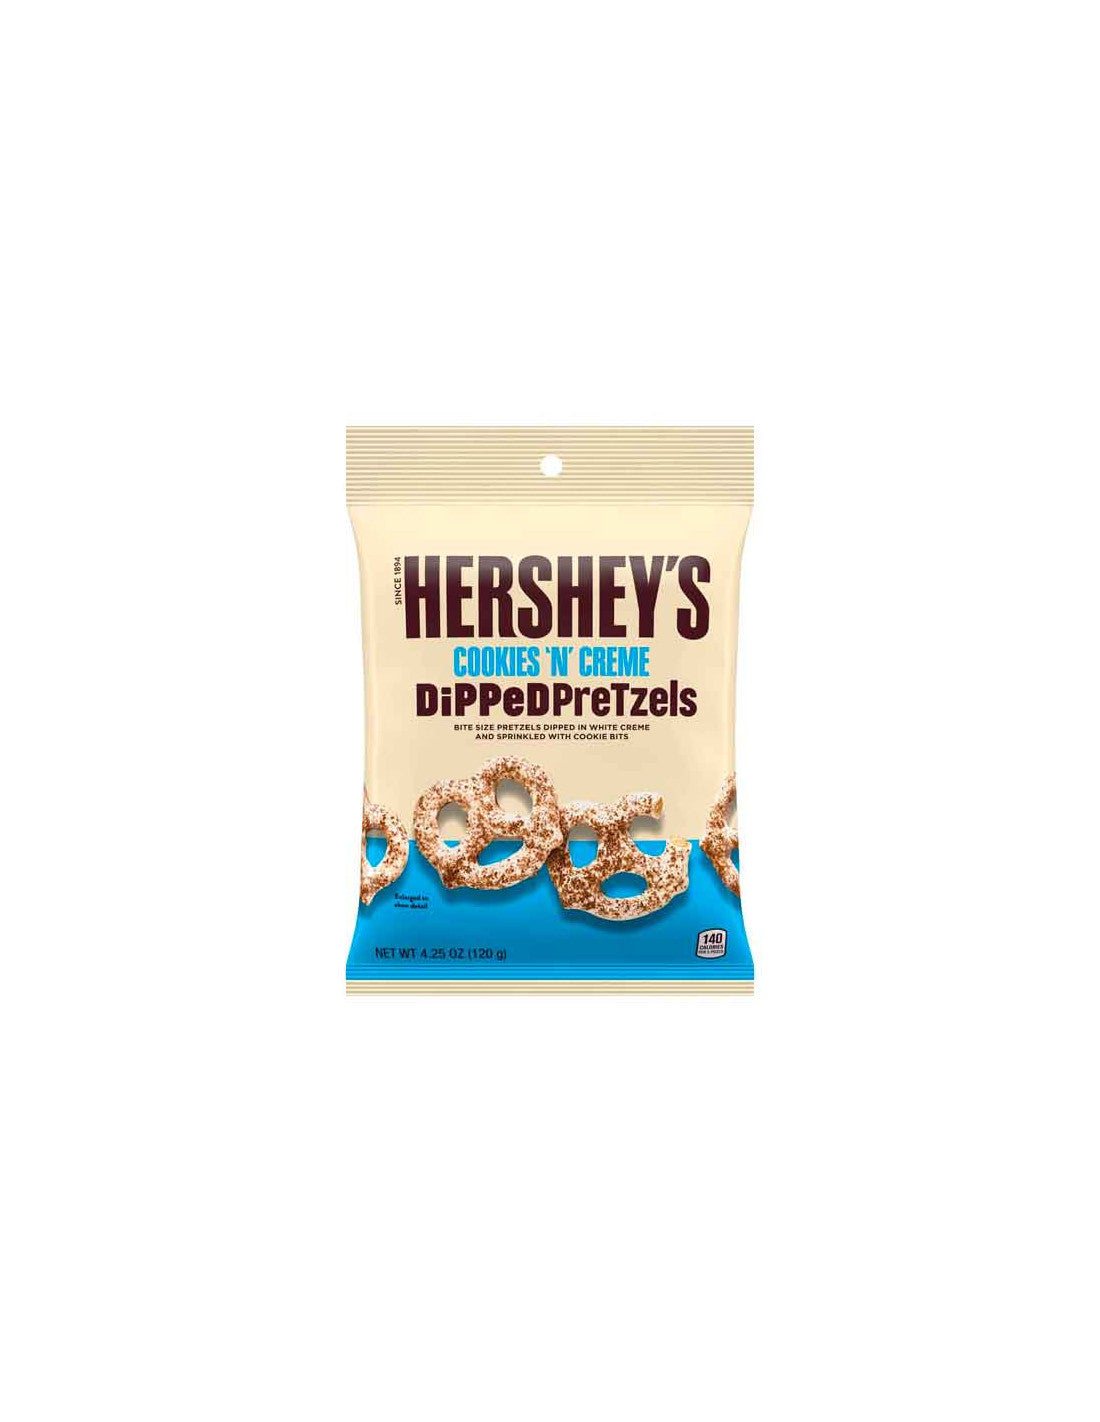 Hershey's Dipped Pretzels Cookies 'n' Creme